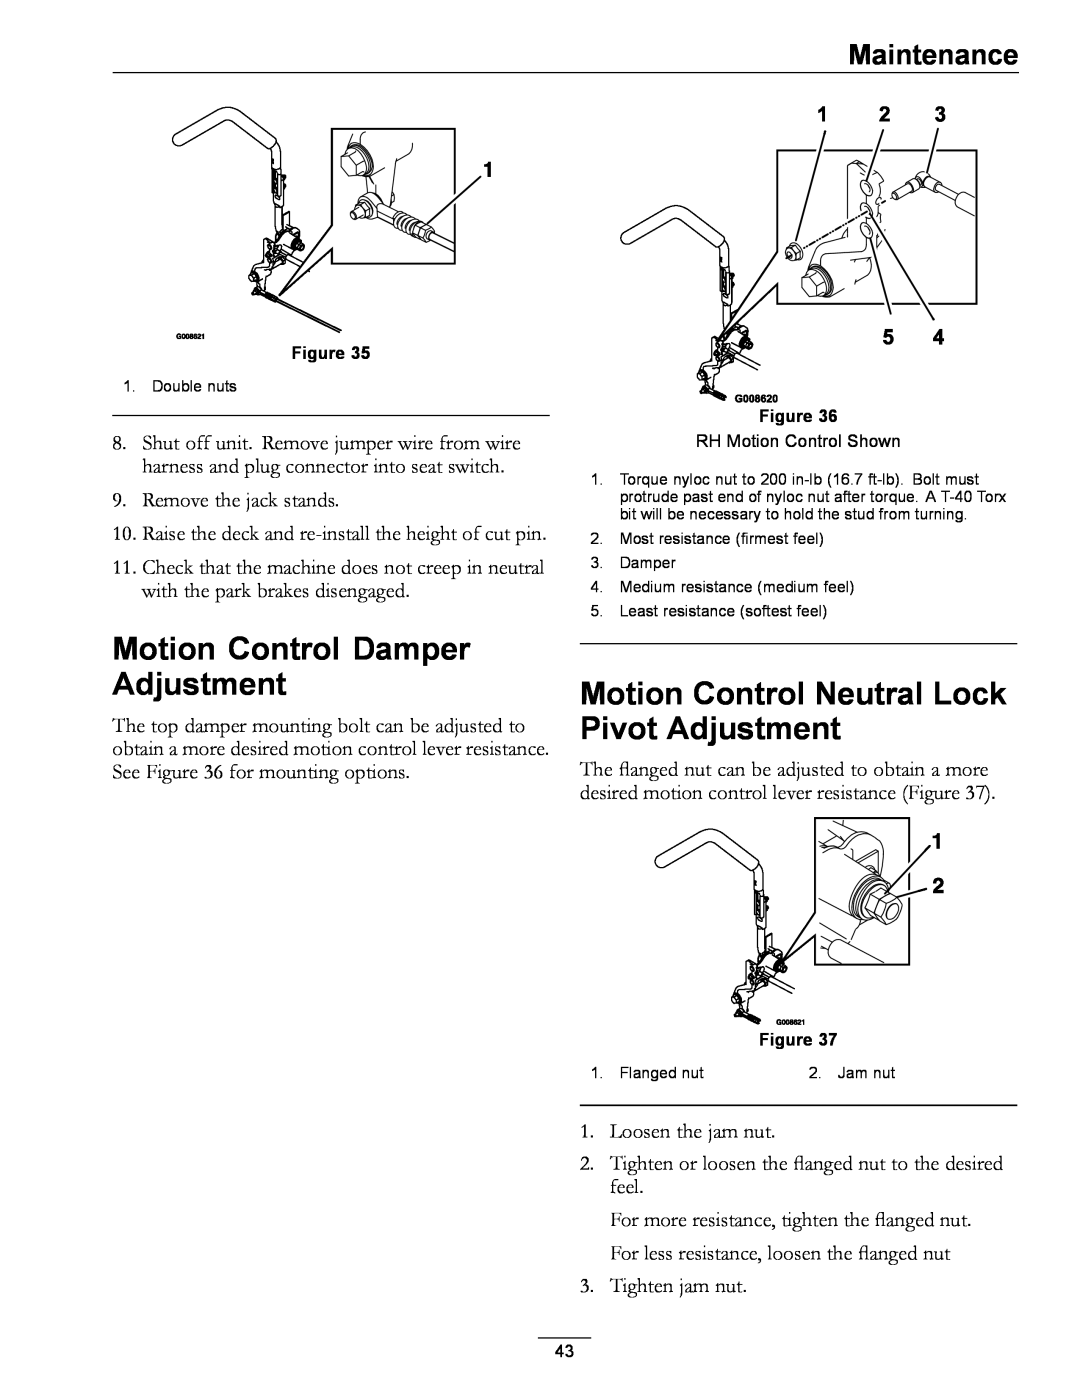 Exmark 312, 000 & higher manual Motion Control Damper Adjustment, Motion Control Neutral Lock Pivot Adjustment, Maintenance 